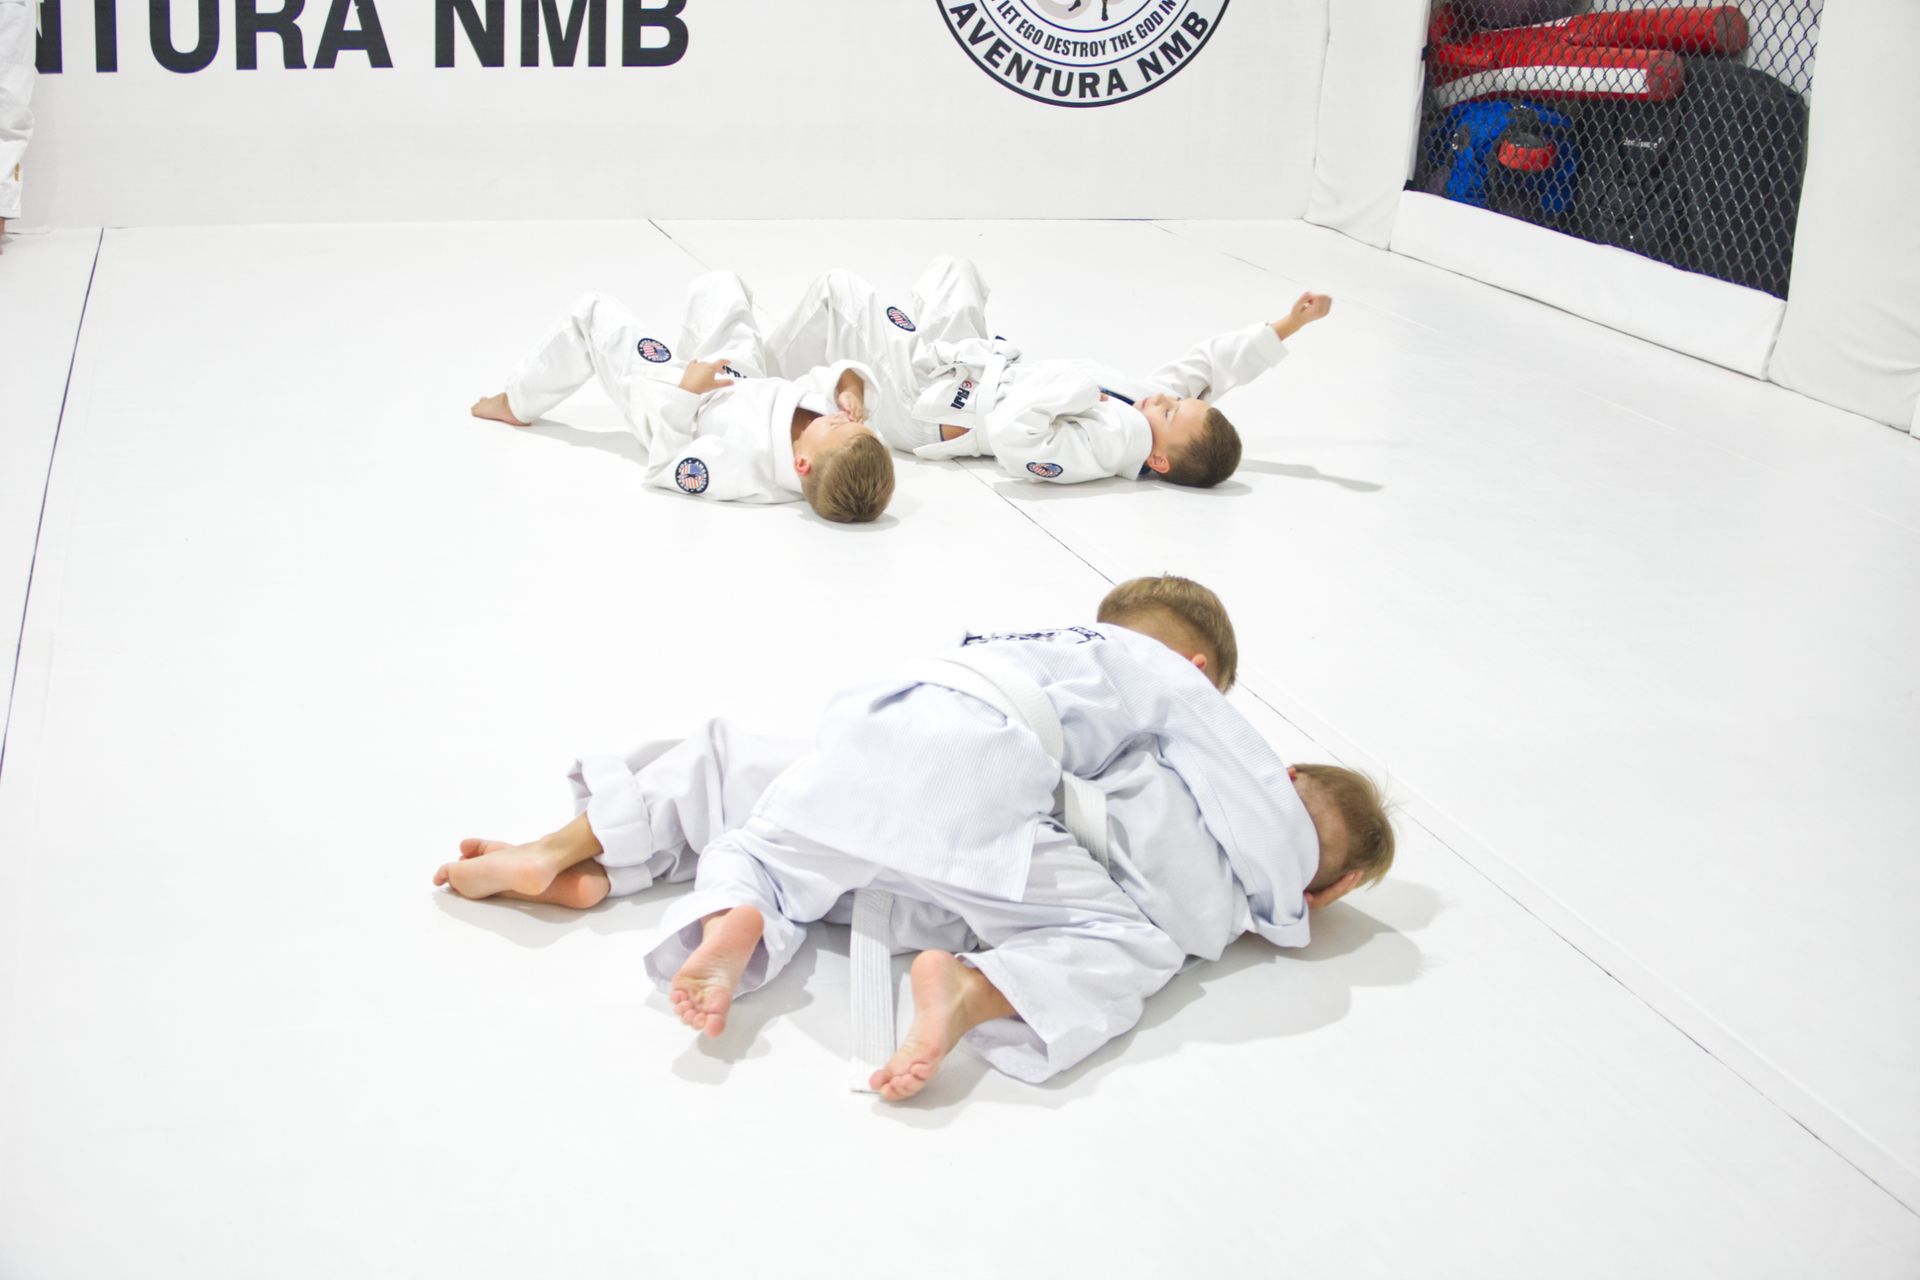 Kids practicing judo at American Top Team Aventura/NMB